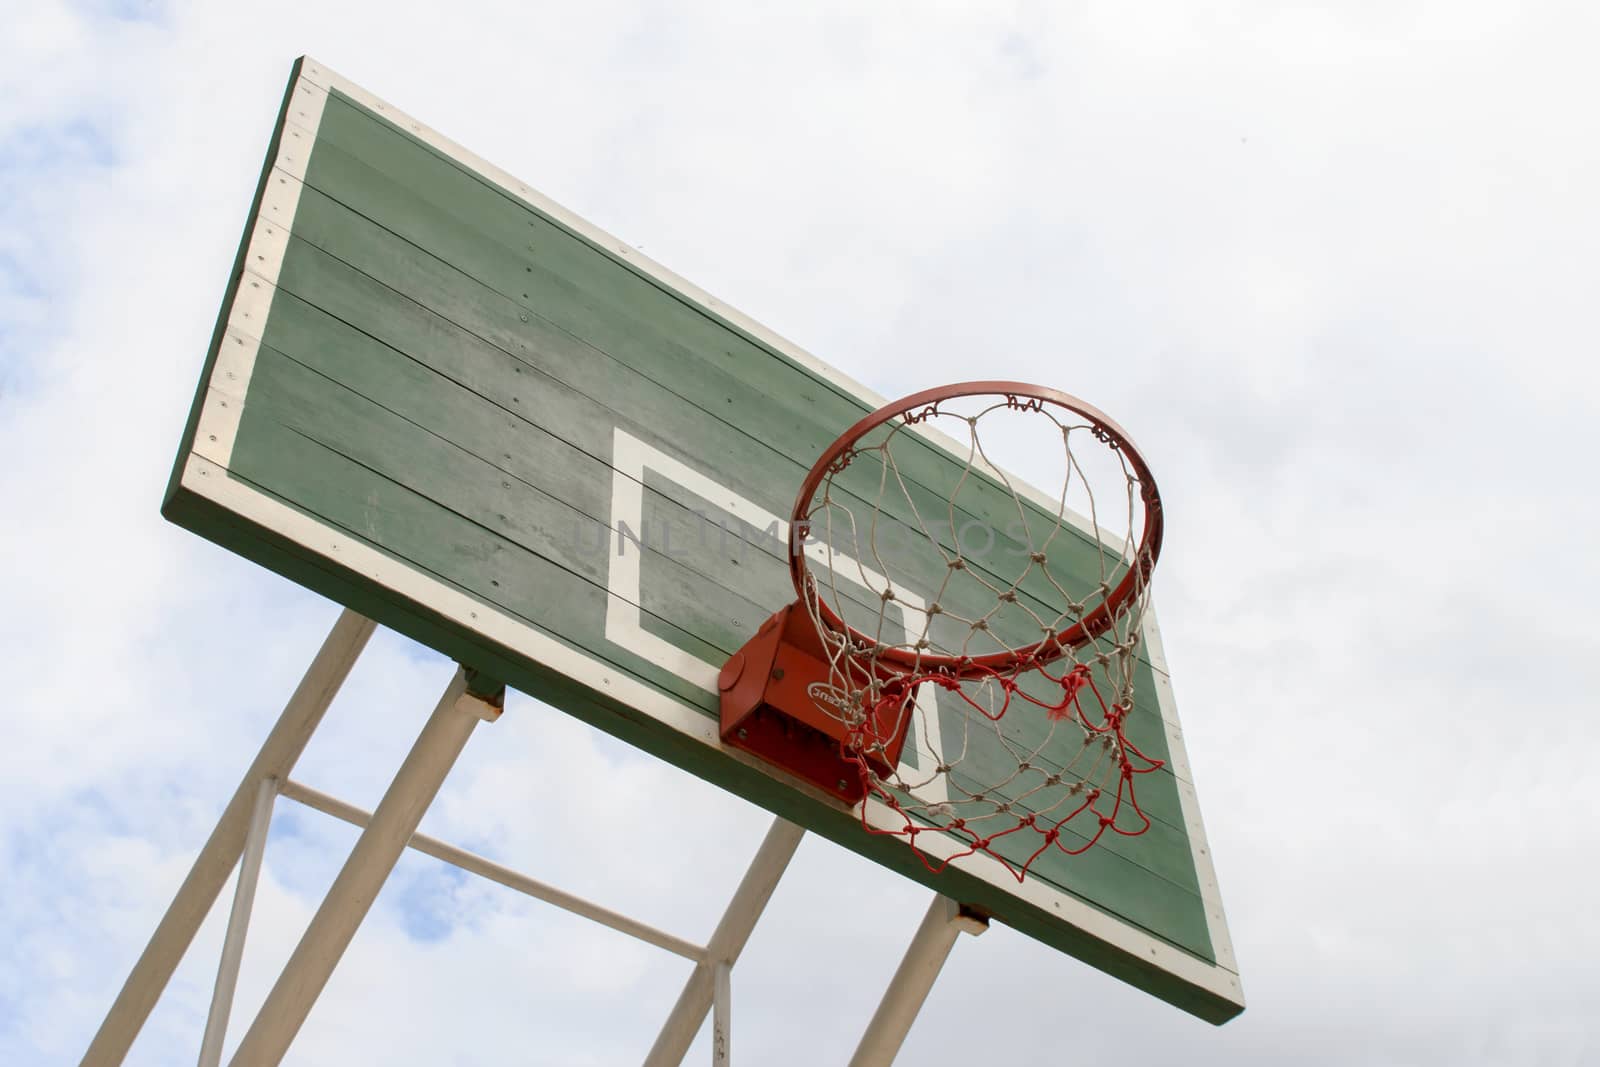 Outdoor Basketball Hoop against a cloudy sky.